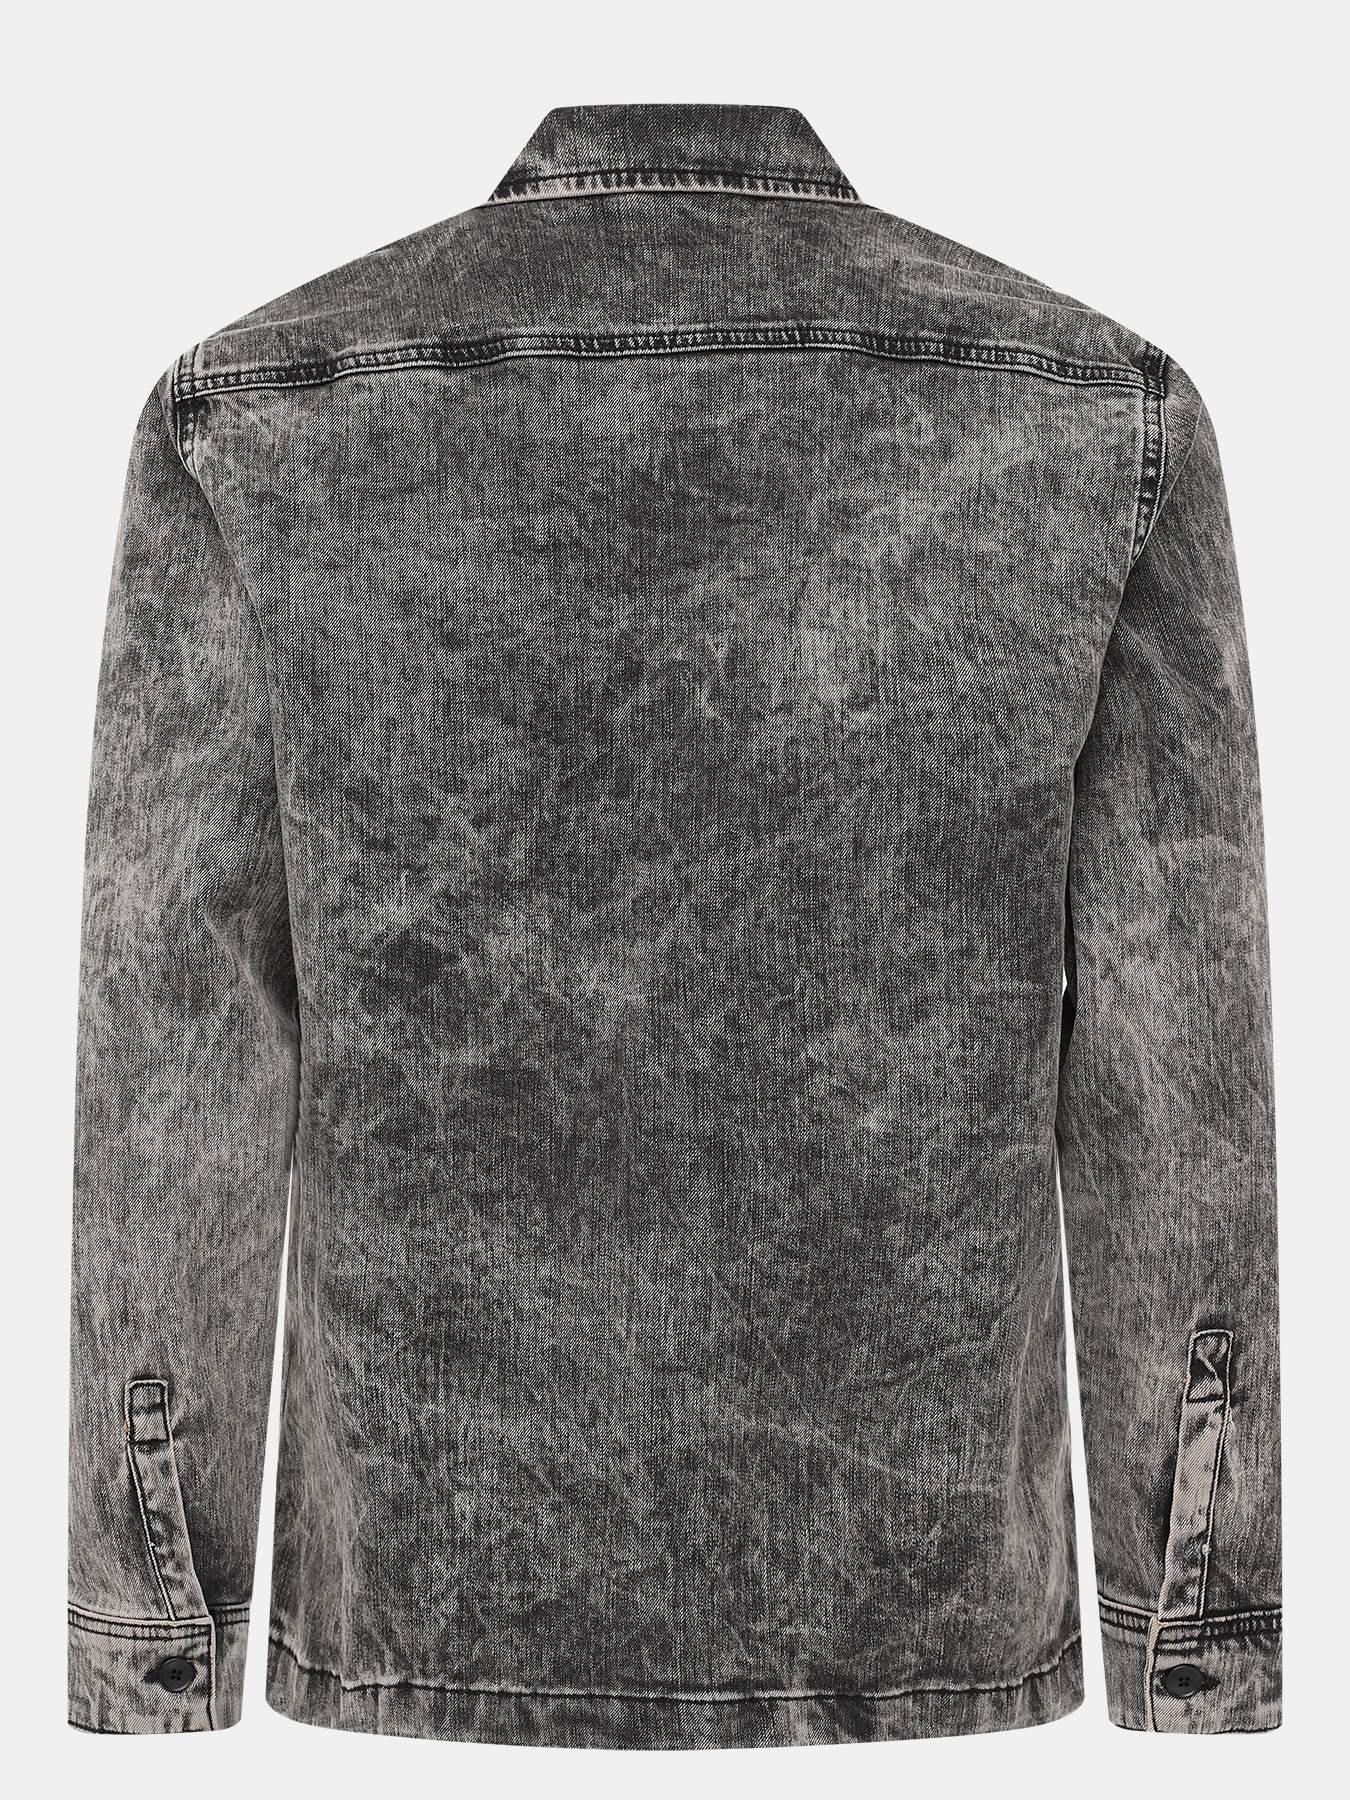 Куртка Lovvo BOSS 420779-043, цвет темно-серый, размер 48-50 - фото 3